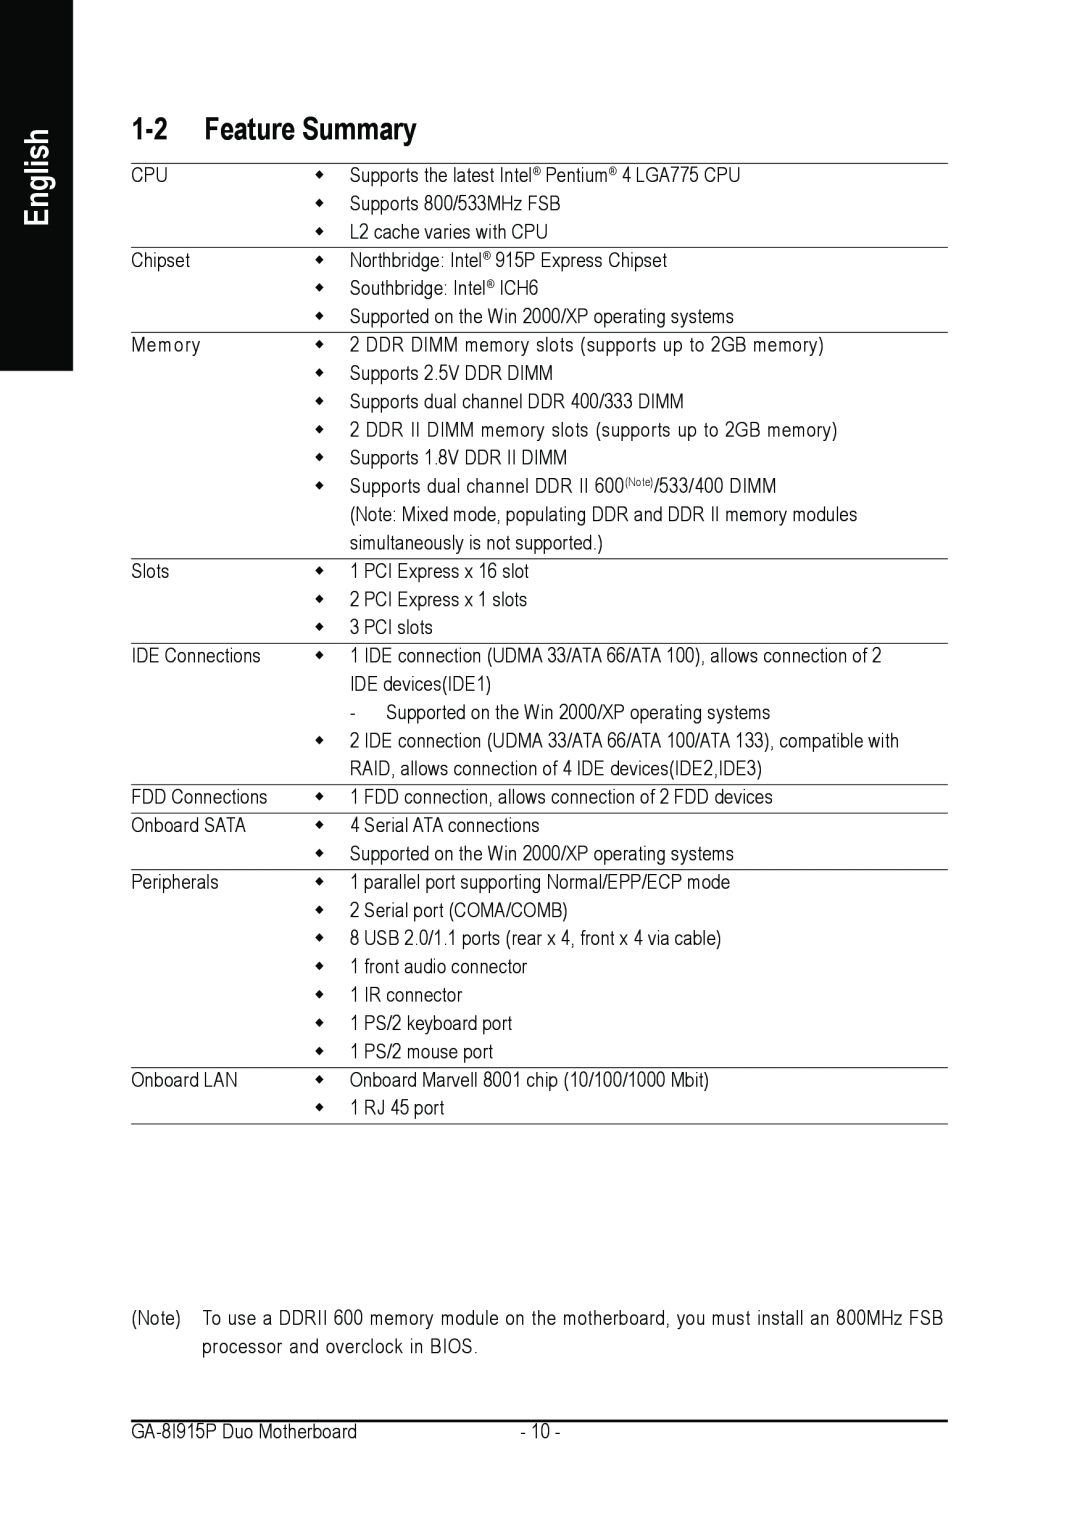 Gigabyte GA-8I915P DUO user manual Feature Summary, English, IDE connection UDMA 33/ATA 66/ATA 100, allows connection of 